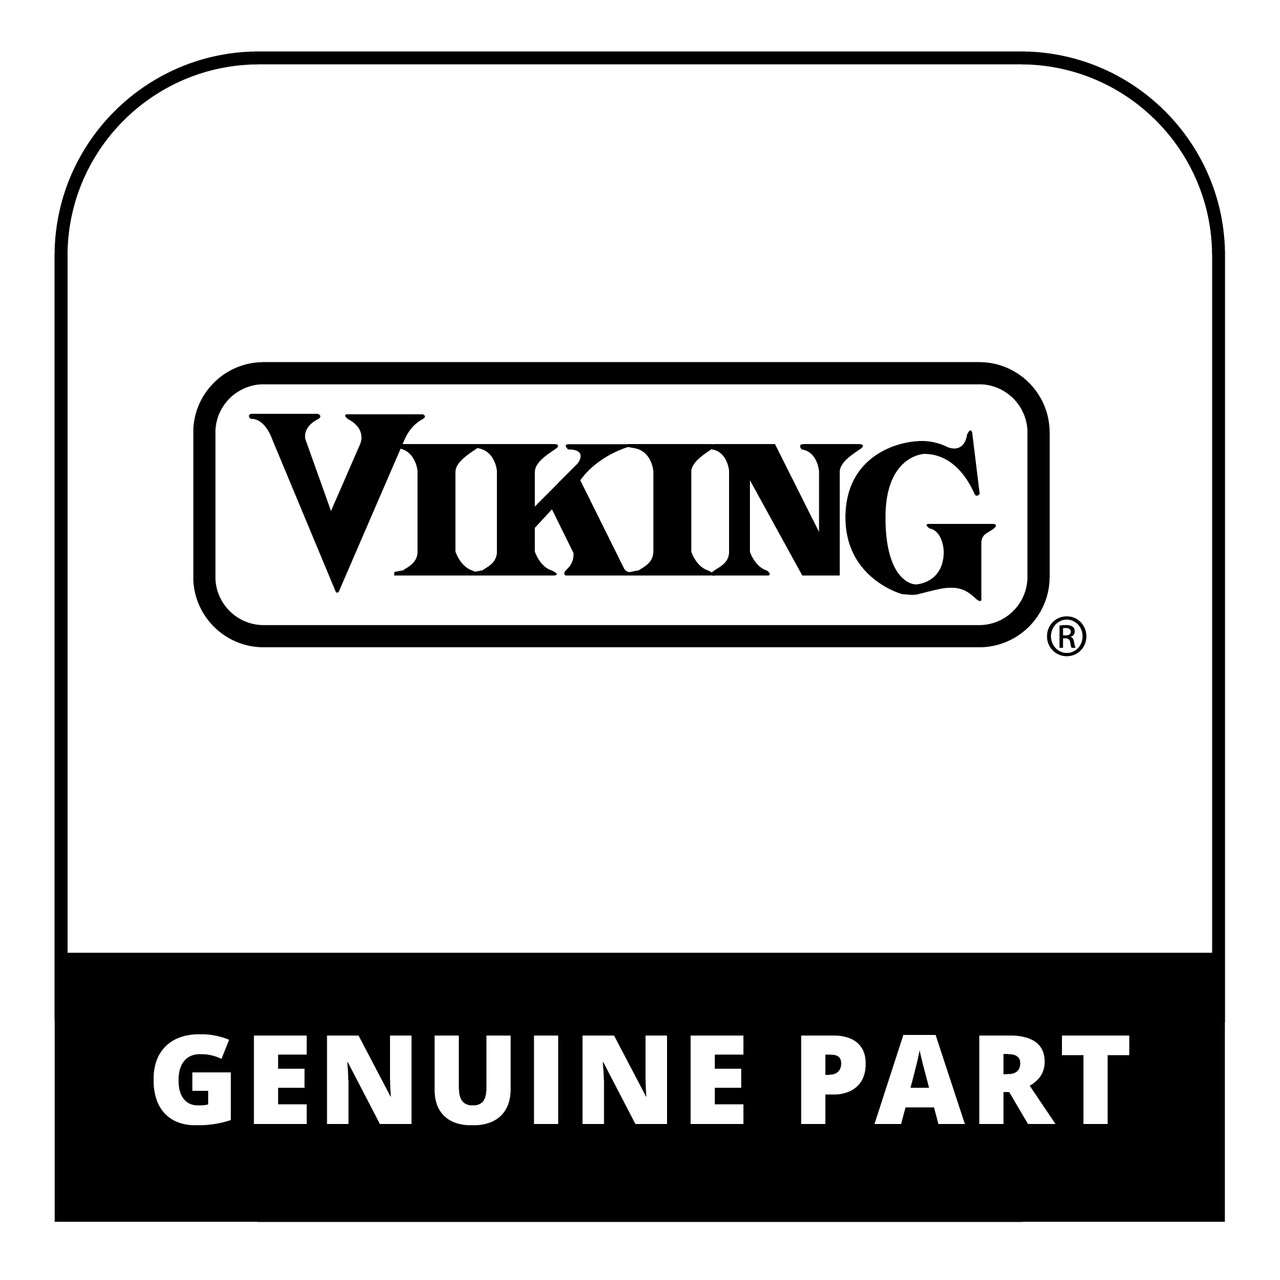 Viking 035841-000 - Standoff, Oven Door Endcap - Genuine Viking Part